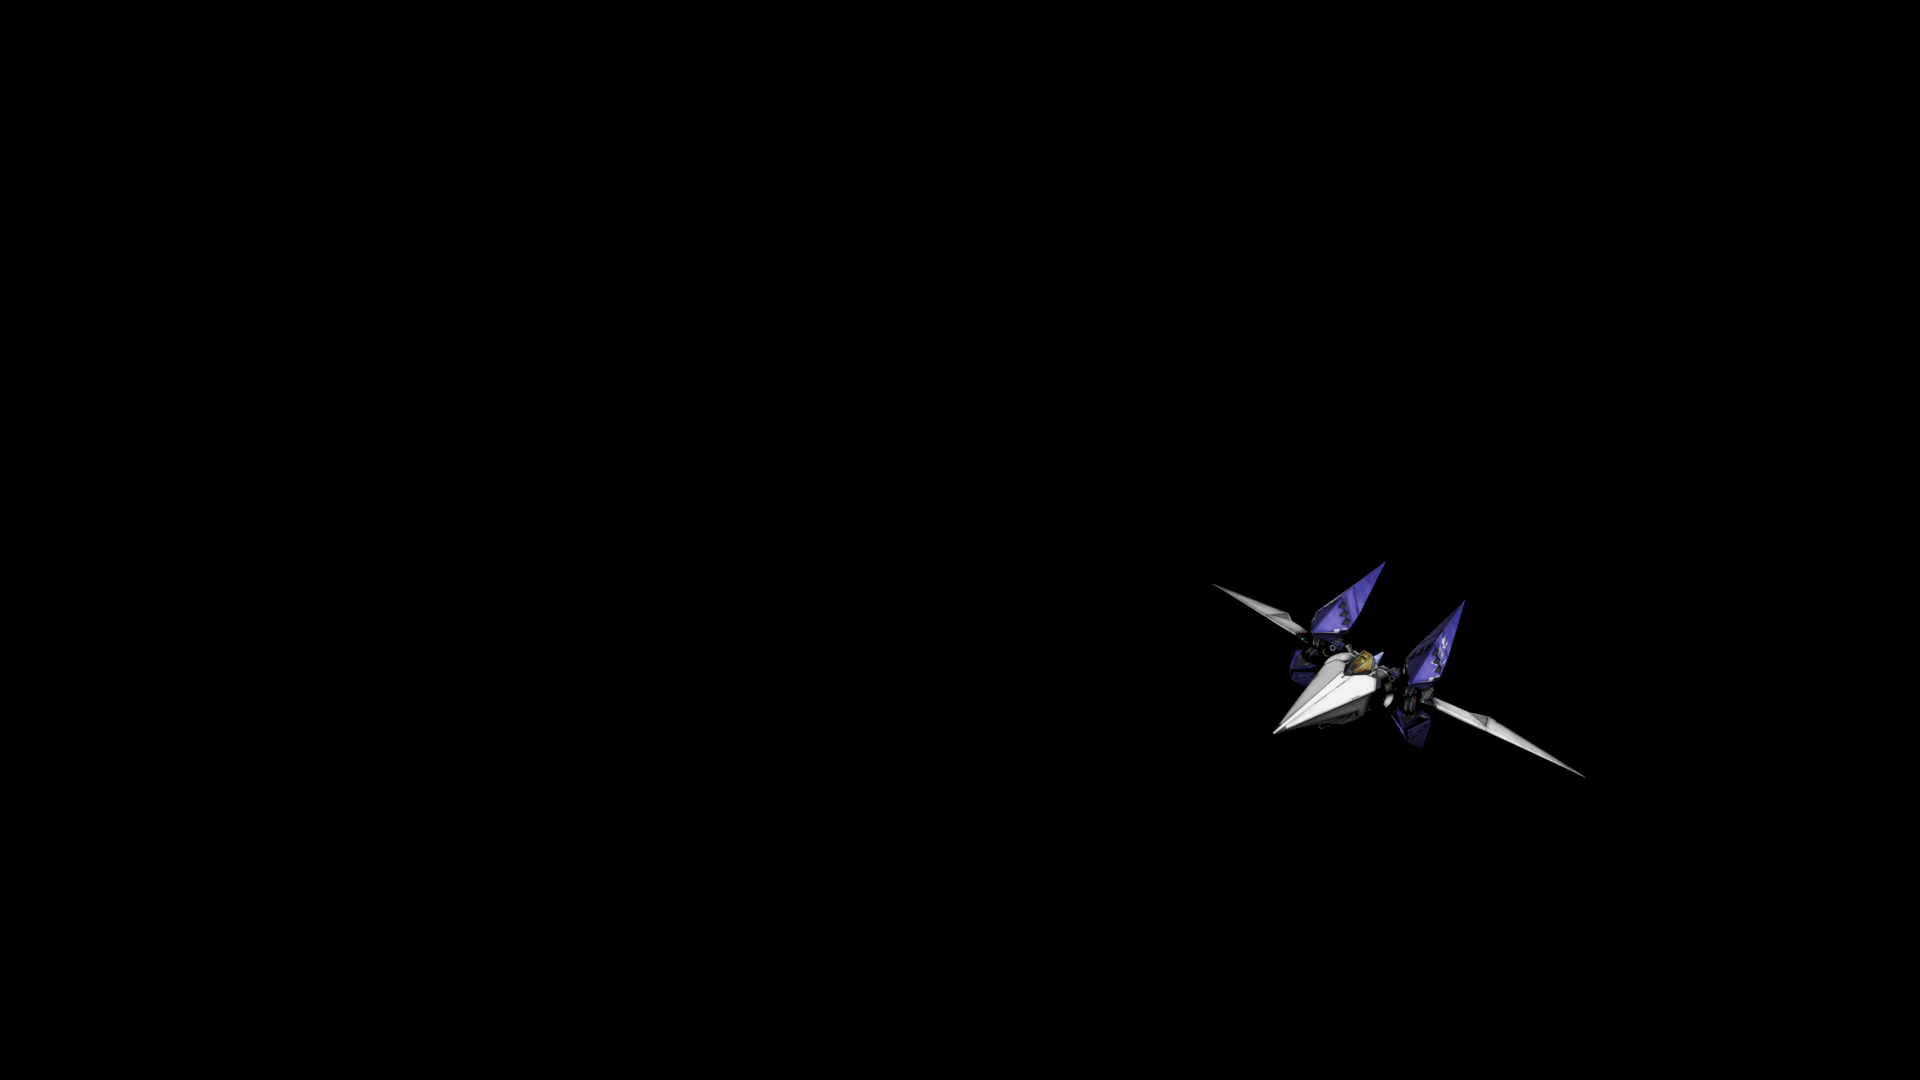 General 1920x1080 Star Fox spaceship video games simple background minimalism vehicle black background